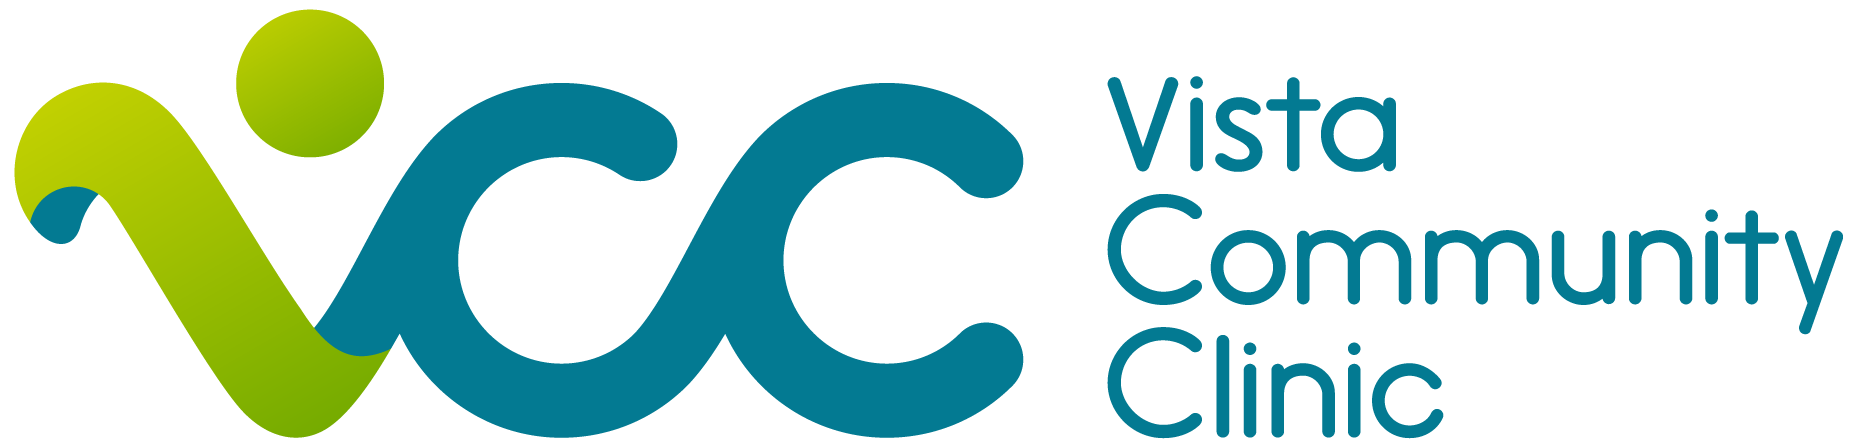 Vista Community Clinic Logo